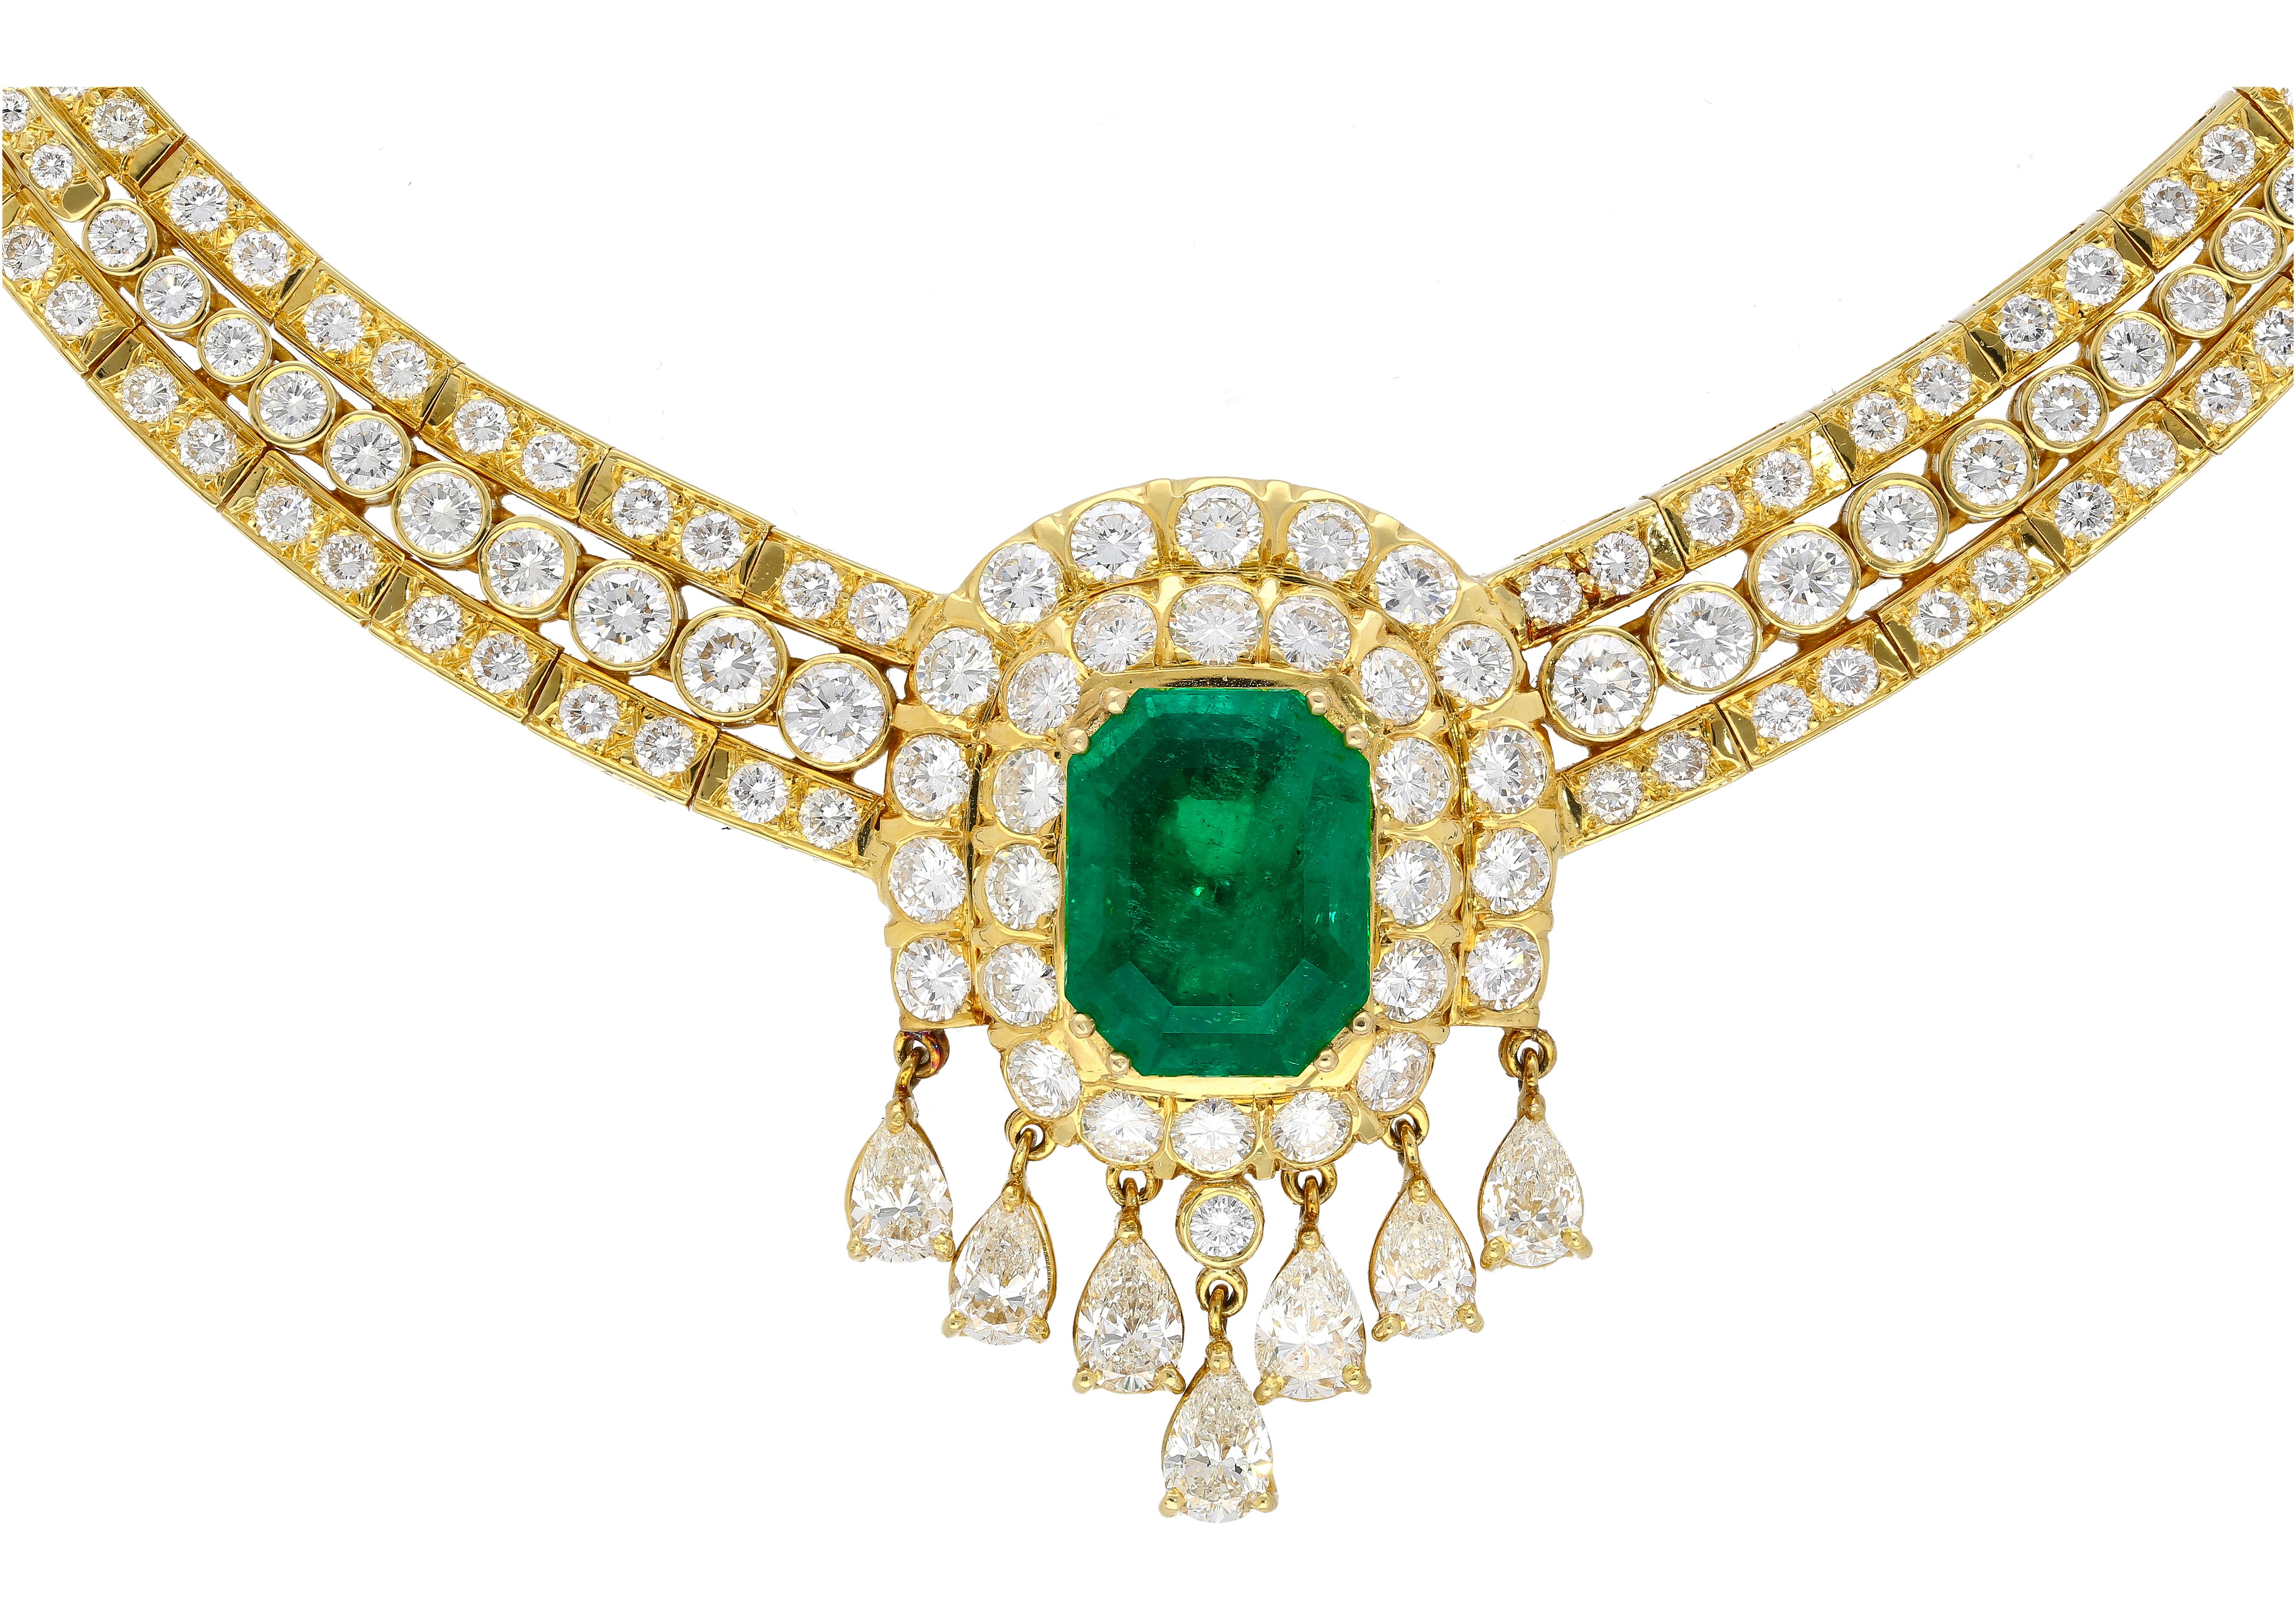 27 Carat Colombian Emerald & Diamond Chandelier Regal Choker Necklace in 18k In New Condition For Sale In Miami, FL